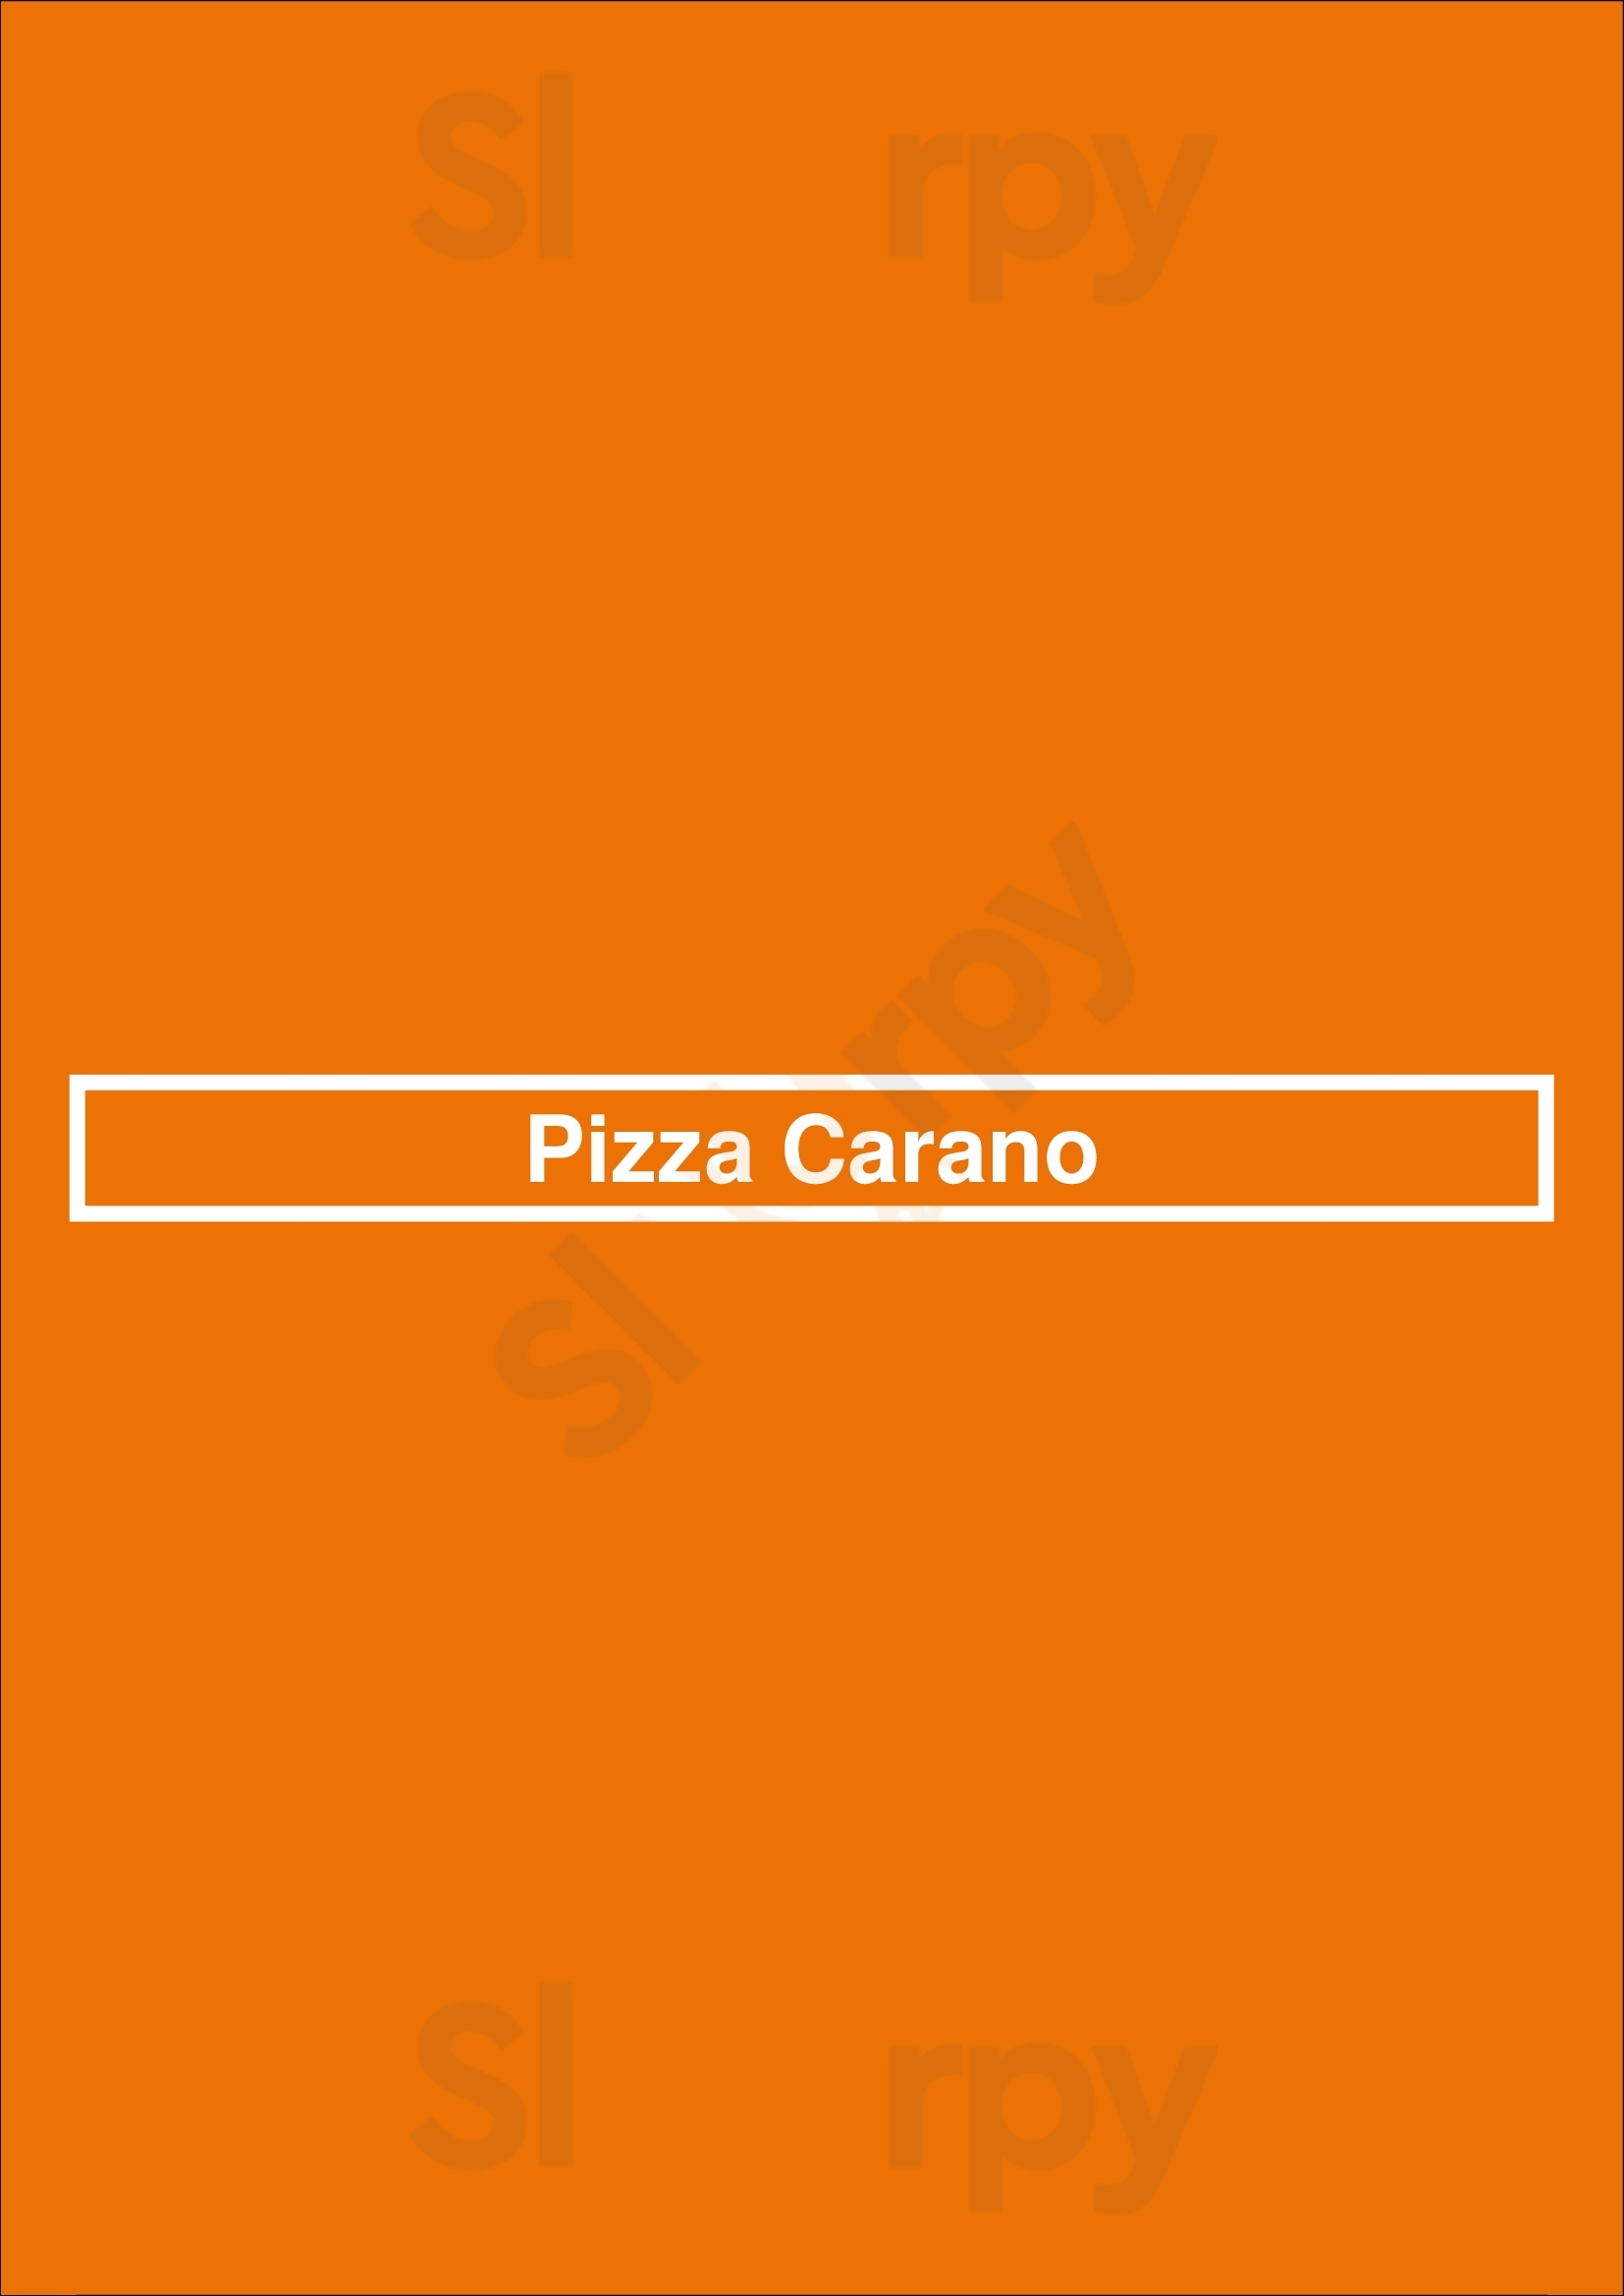 Pizza Carano Vancouver Menu - 1